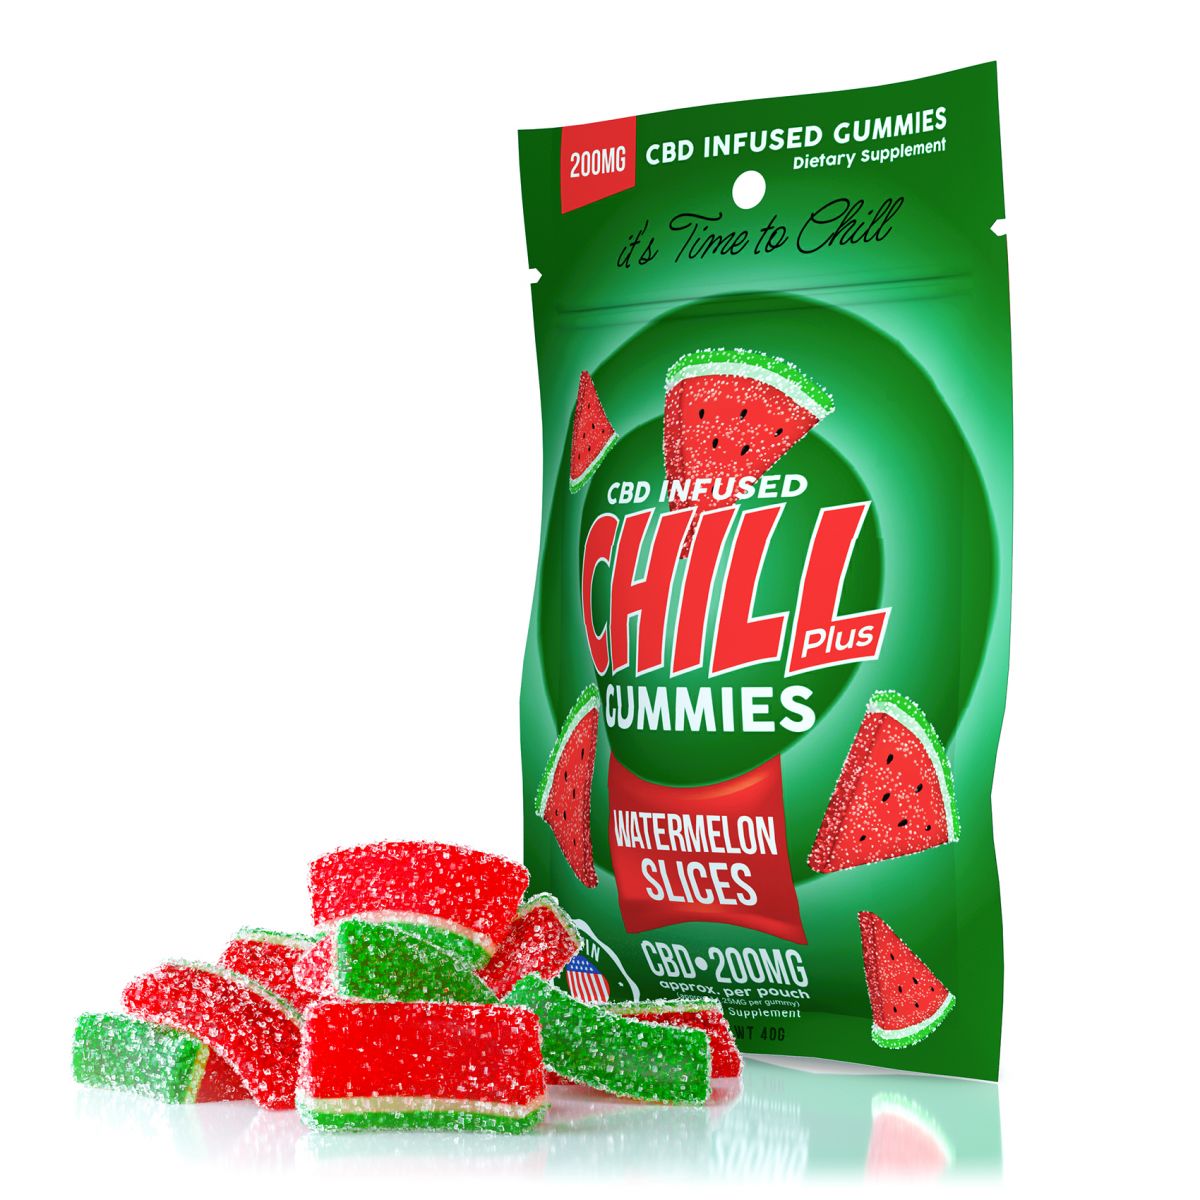 Chill Plus Gummies - plátky melounu s infuzí CBD